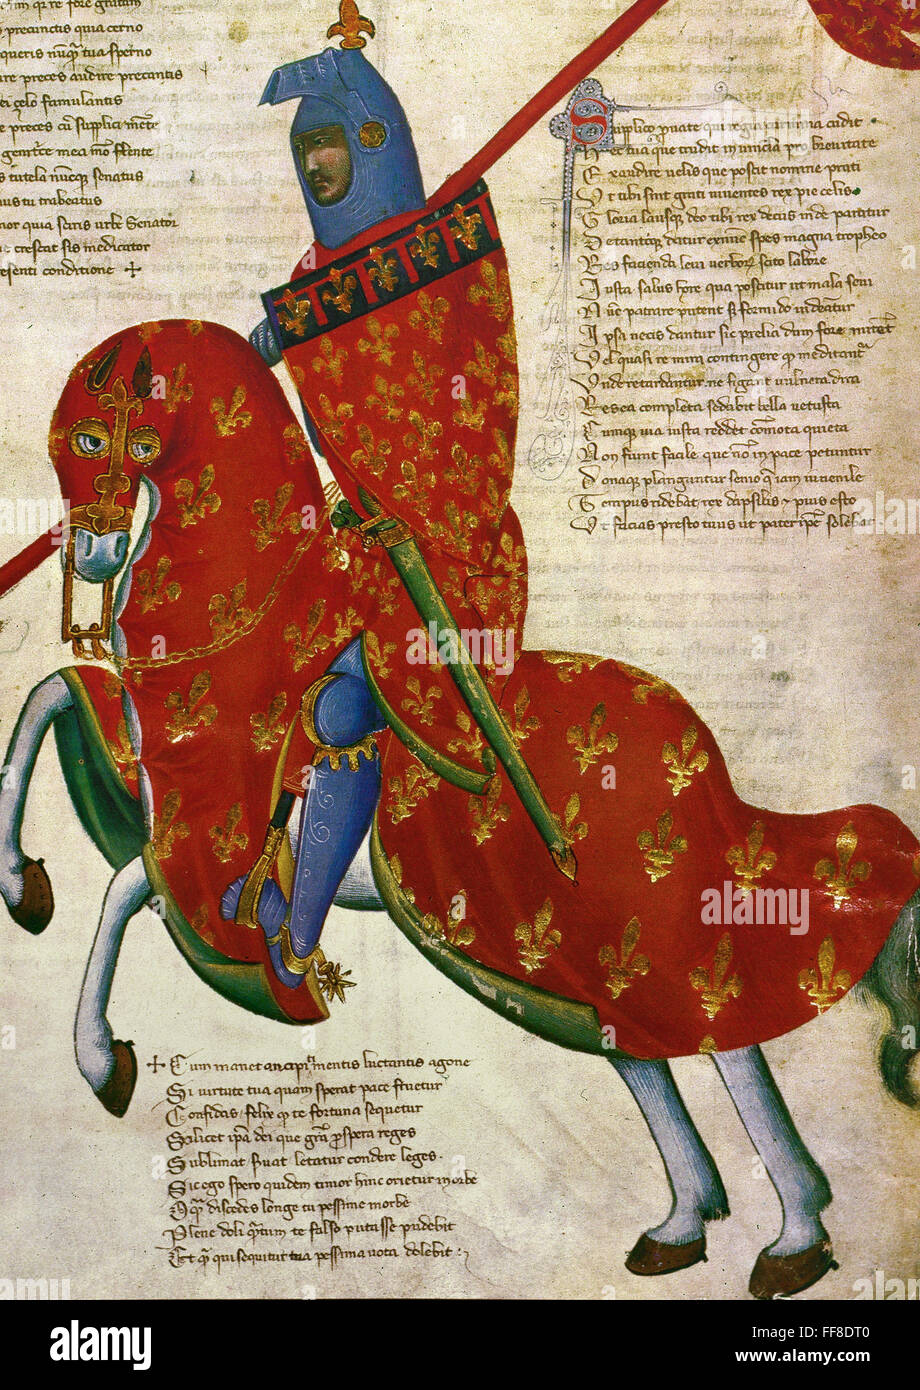 KNIGHT, siglo 14. /NAn caballero armado de Prato. Ilustración del manuscrito, Italiano, siglo 14. Foto de stock